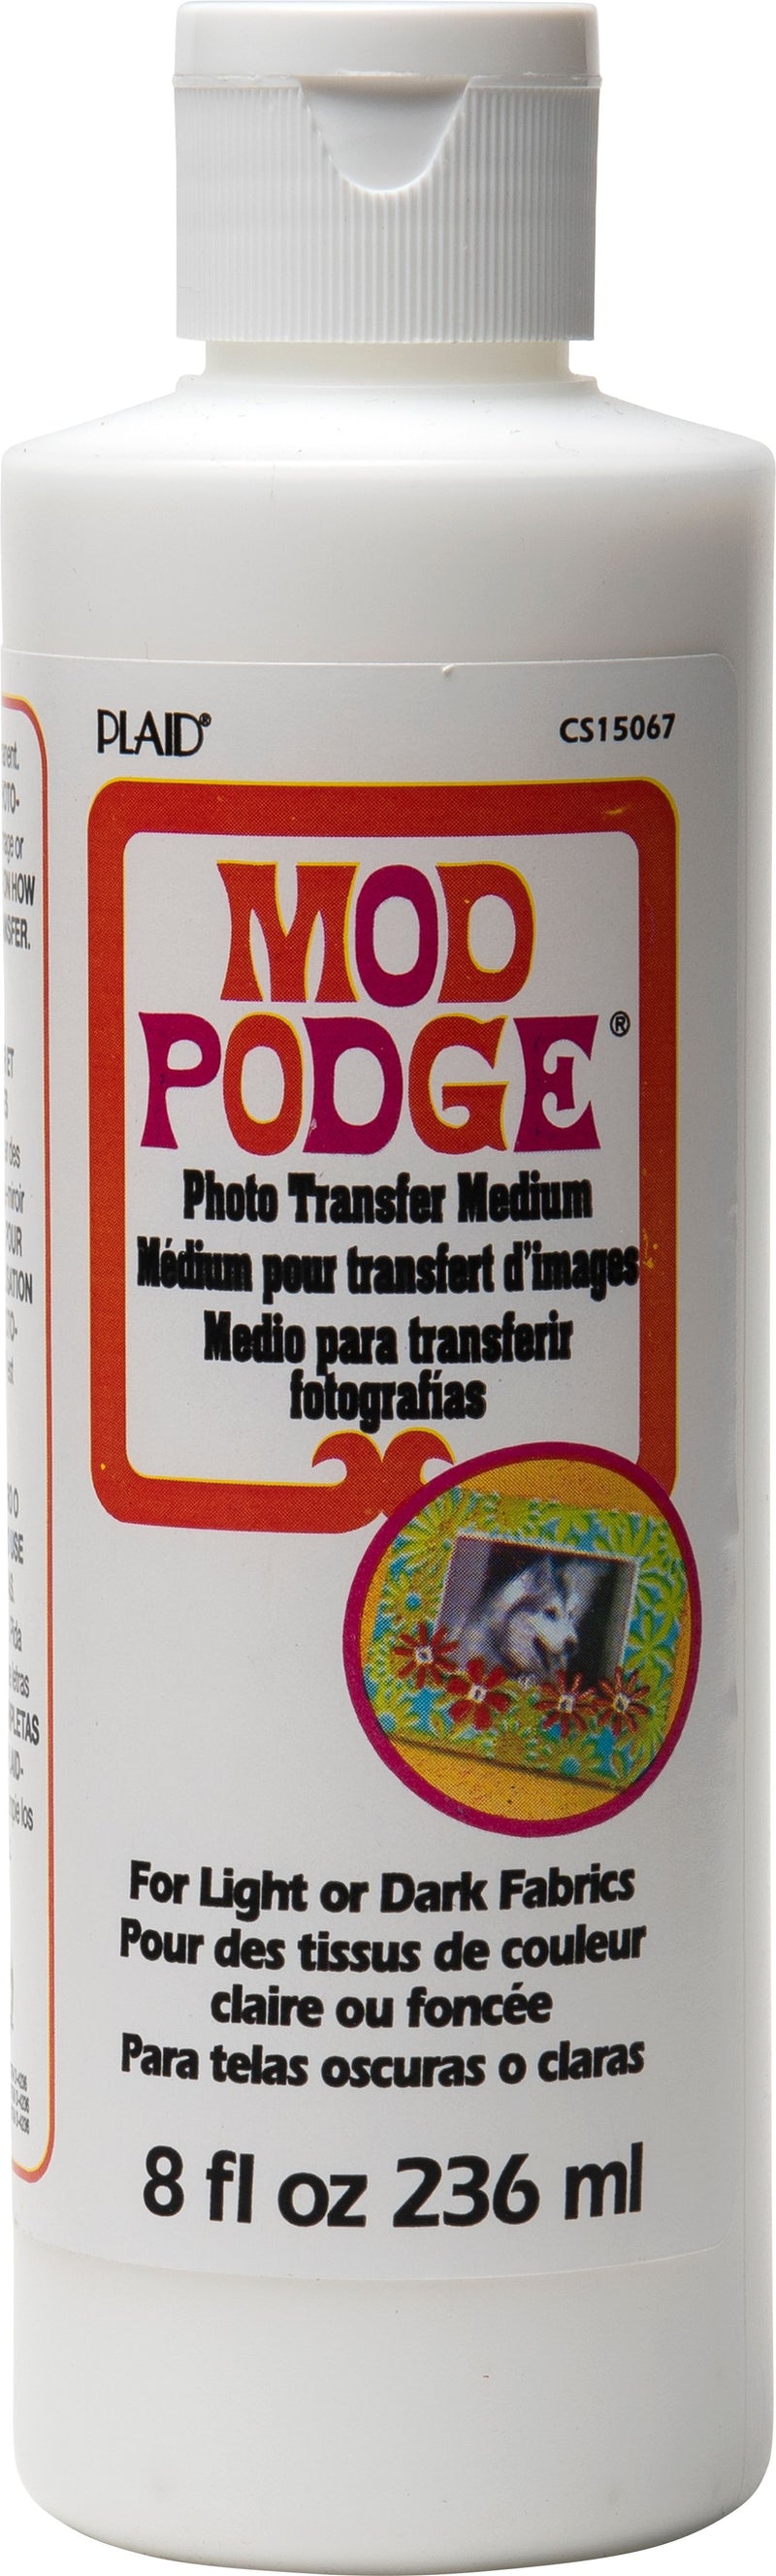 Mod Podge Photo Transfer Craft Medium